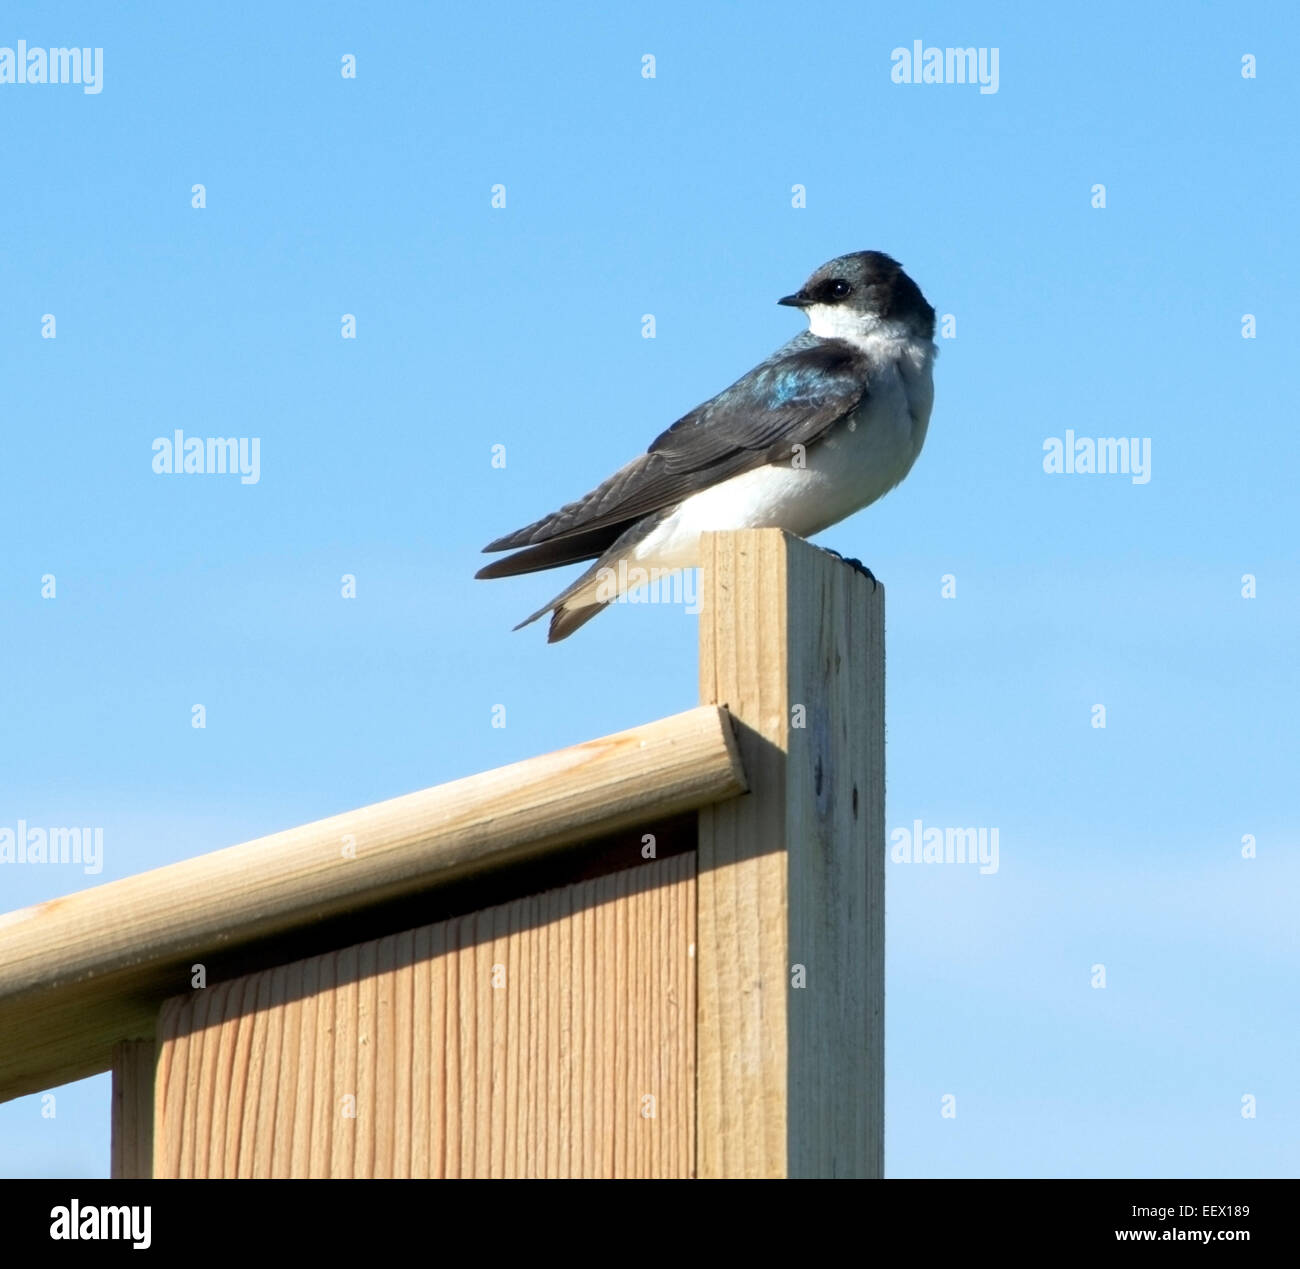 Tree Swallow, Tachycineta bicolor, male perched on birdhouse Stock Photo